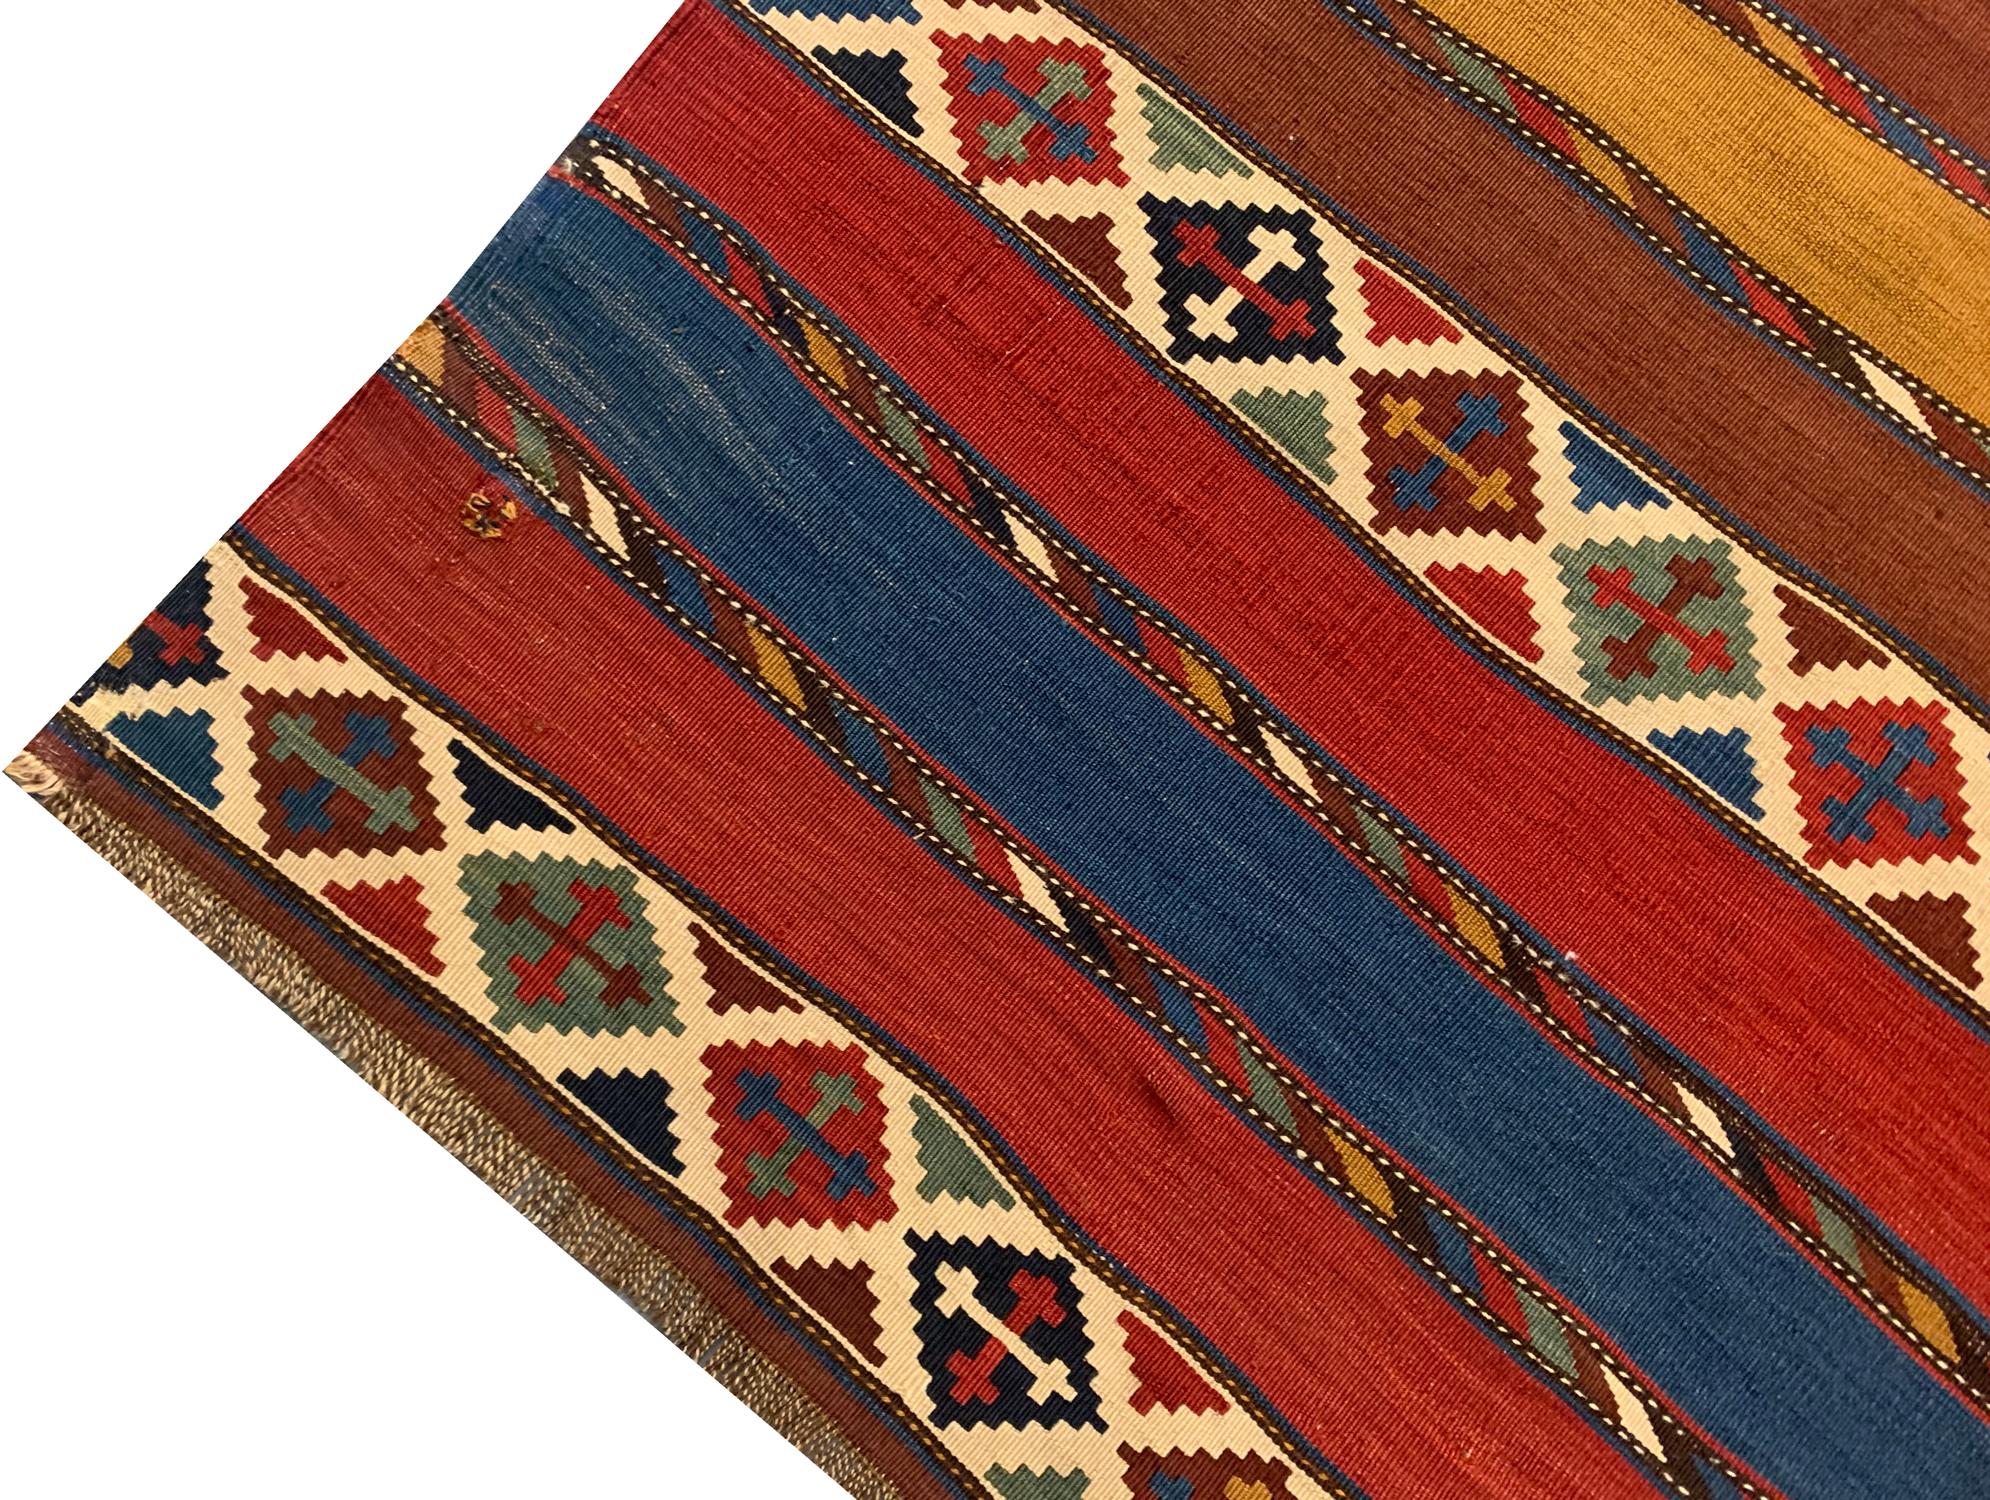 Vegetable Dyed Striped Kilim Traditional Wool Antique Caucasian Kilim Rug